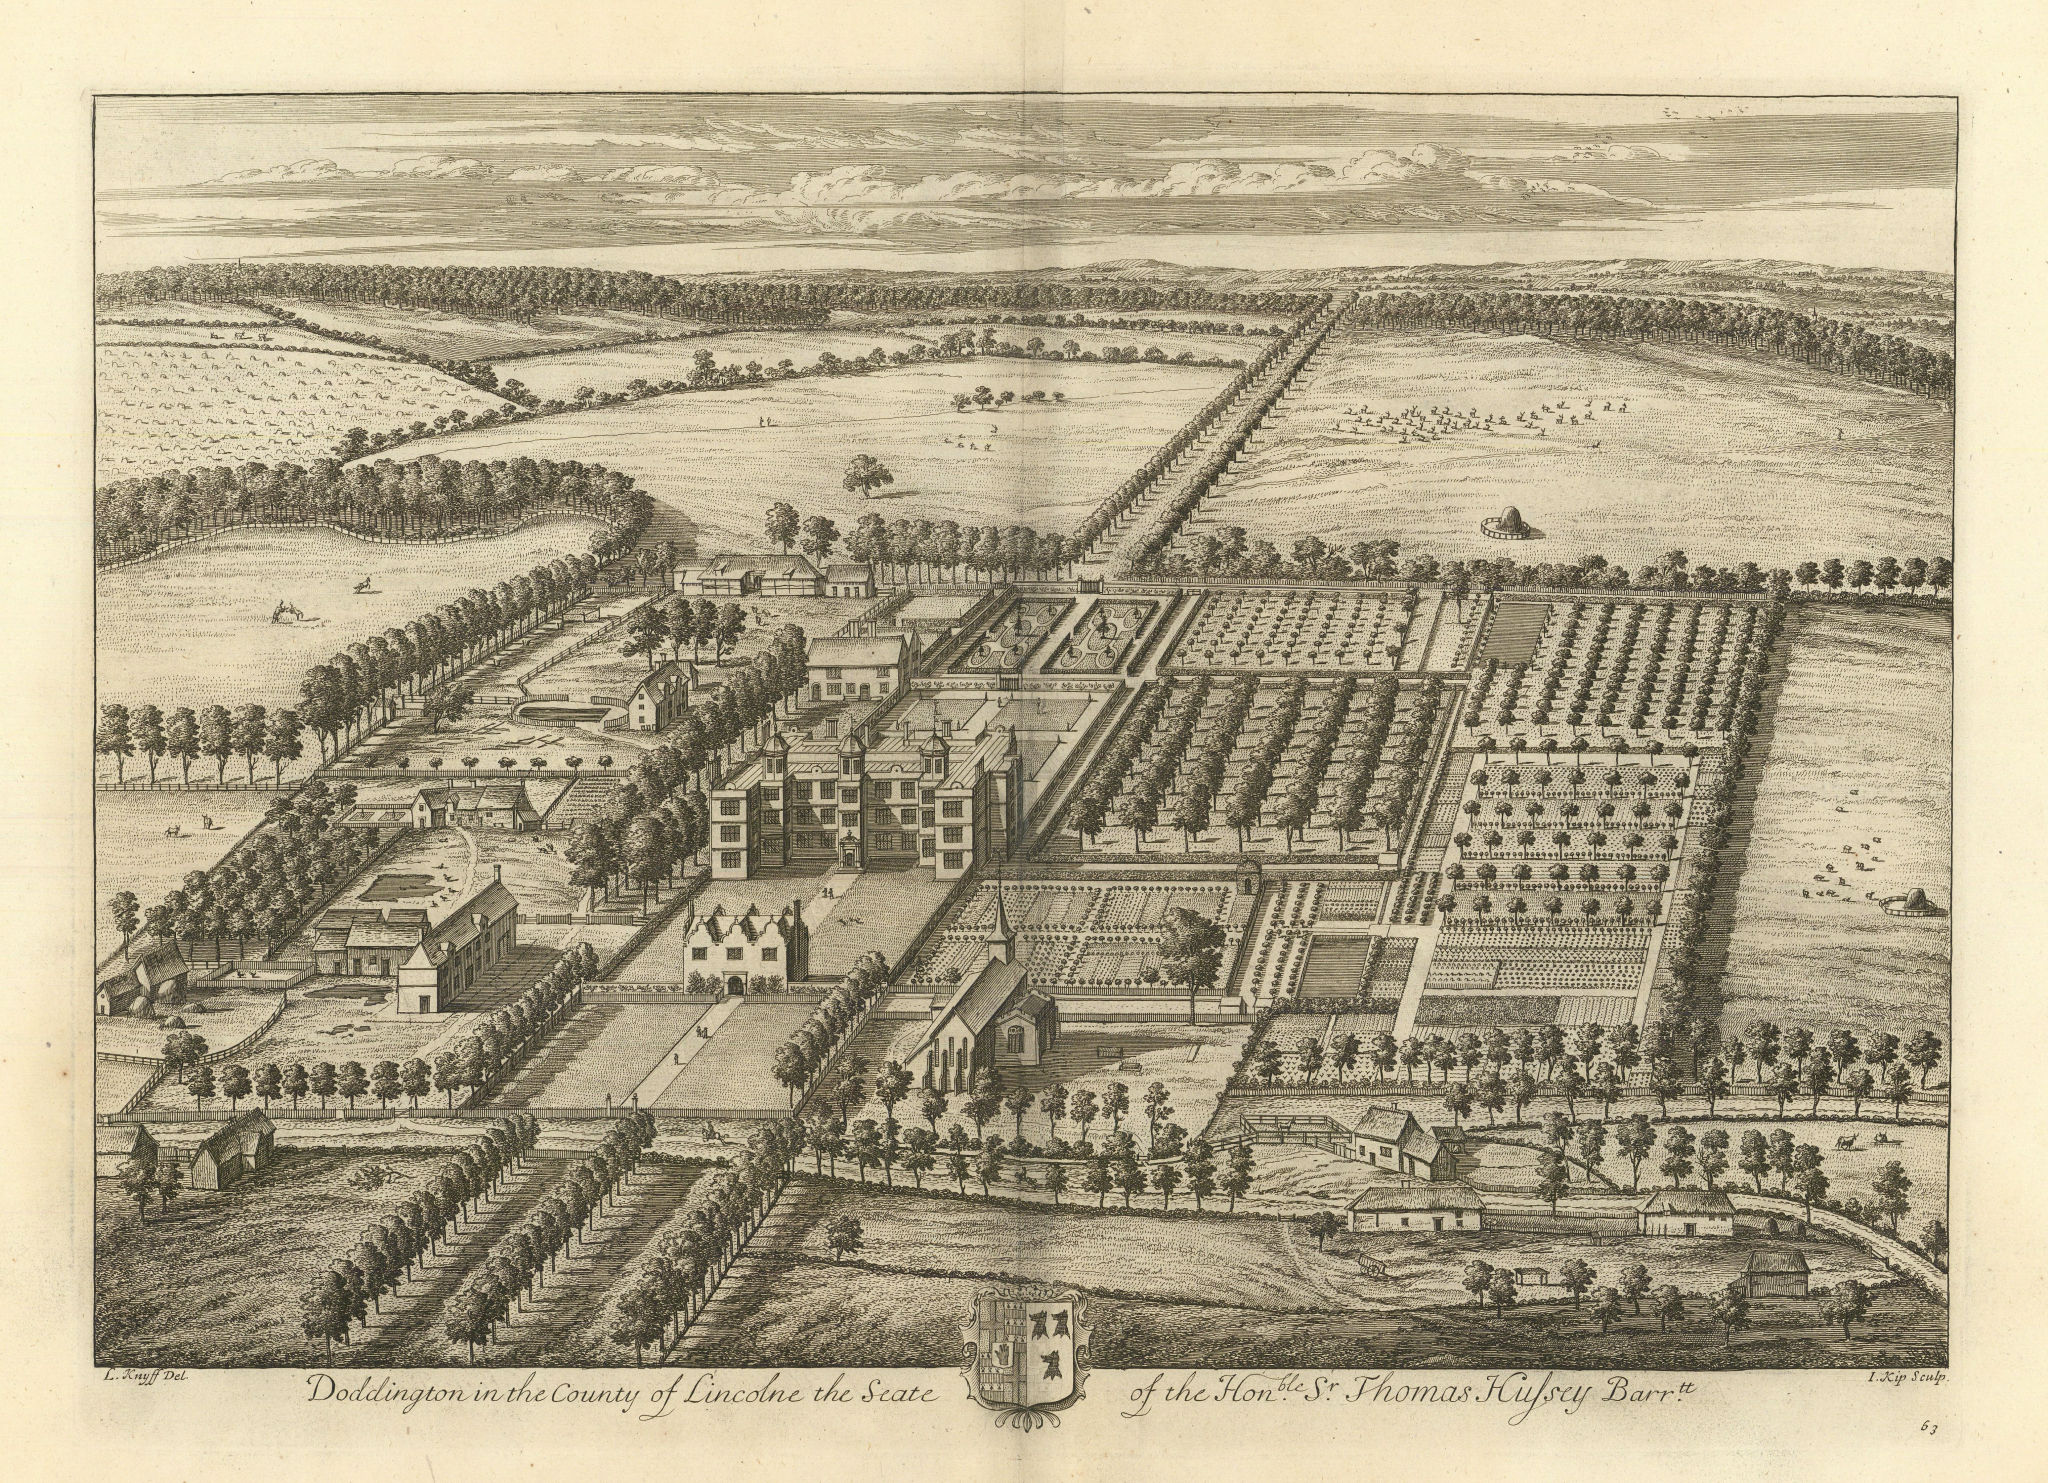 Associate Product Doddington Hall by Kip & Knyff. "Doddington in the County of Lincolne" 1709